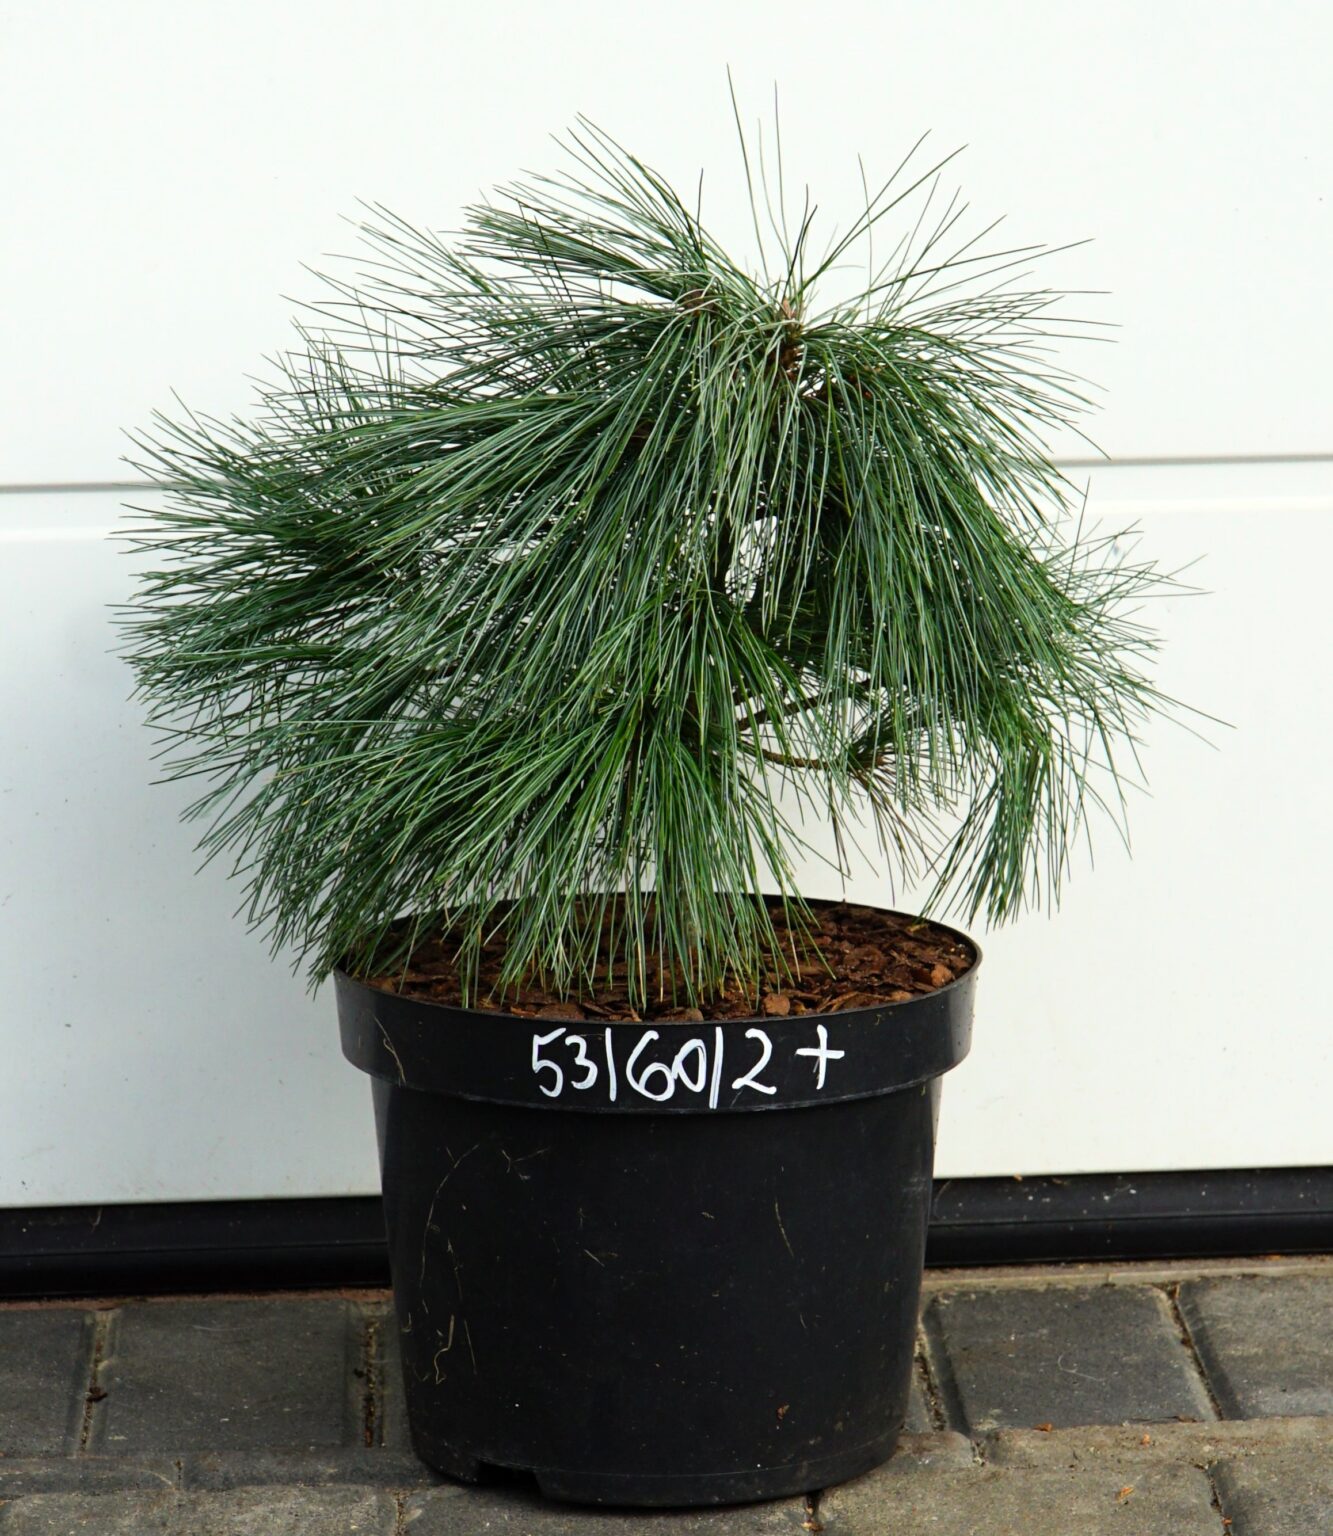 SOSNA WEJMUTKA CONNECTICUT SLATE Pinus strobus